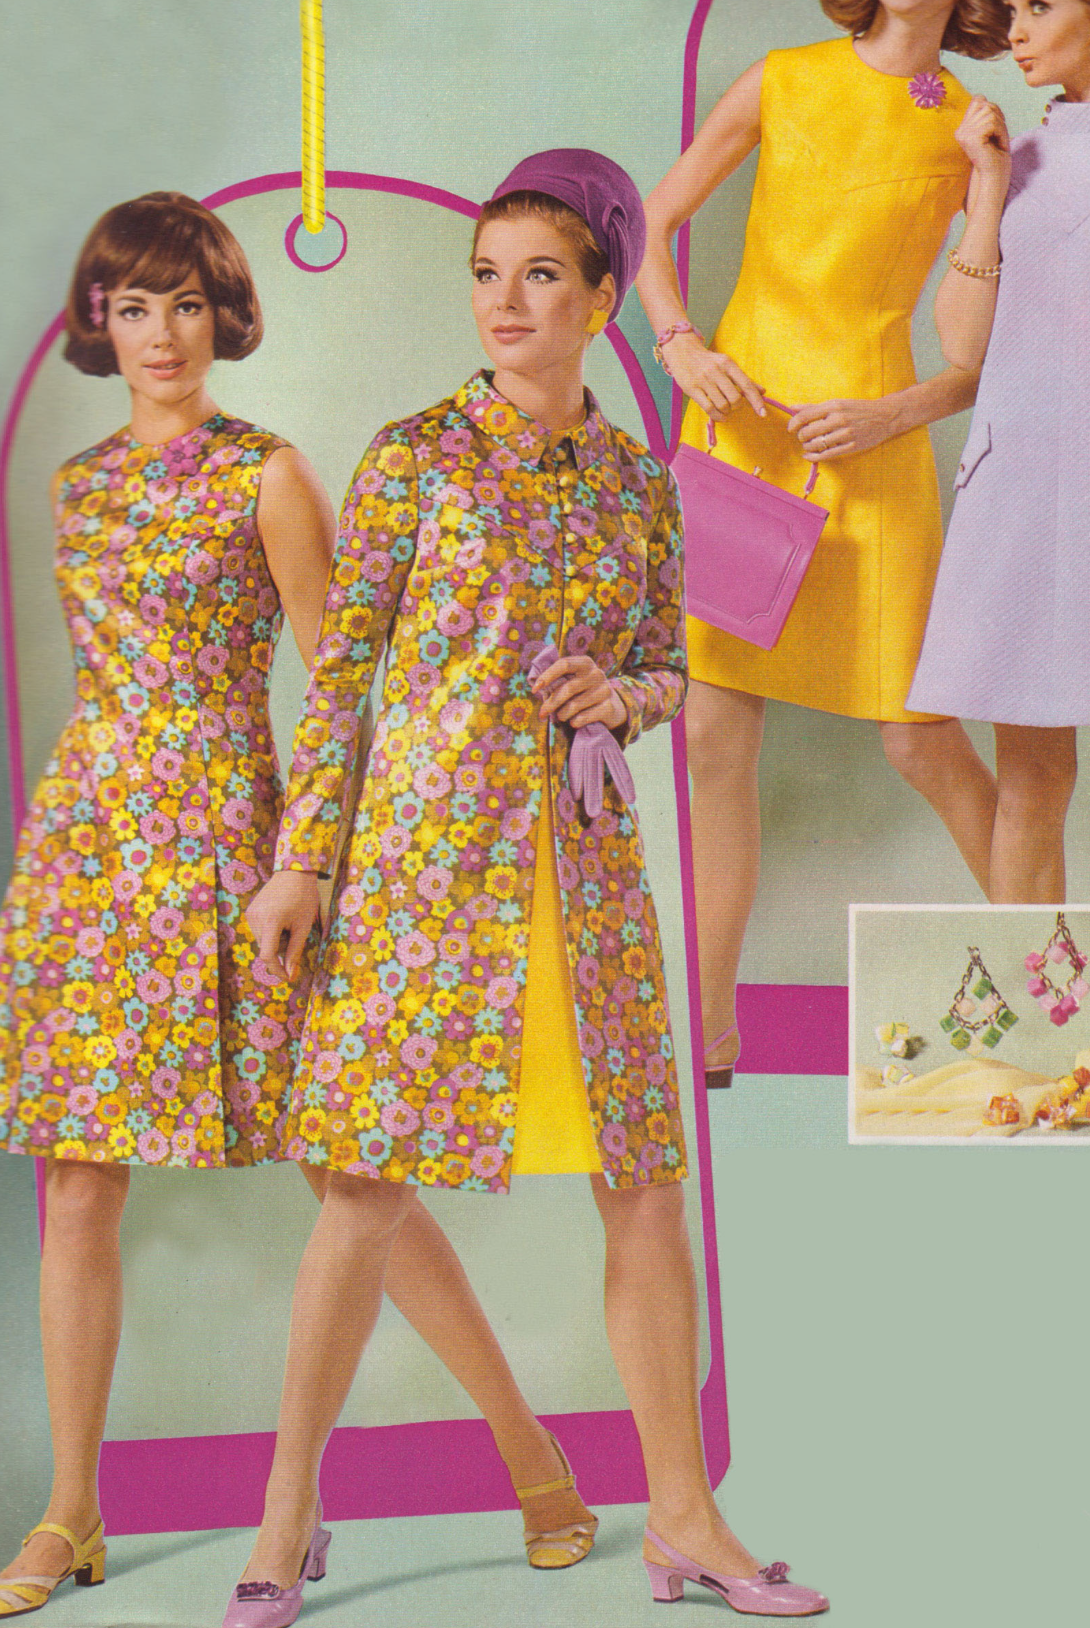 Key Elements of 1960's Fashion Design